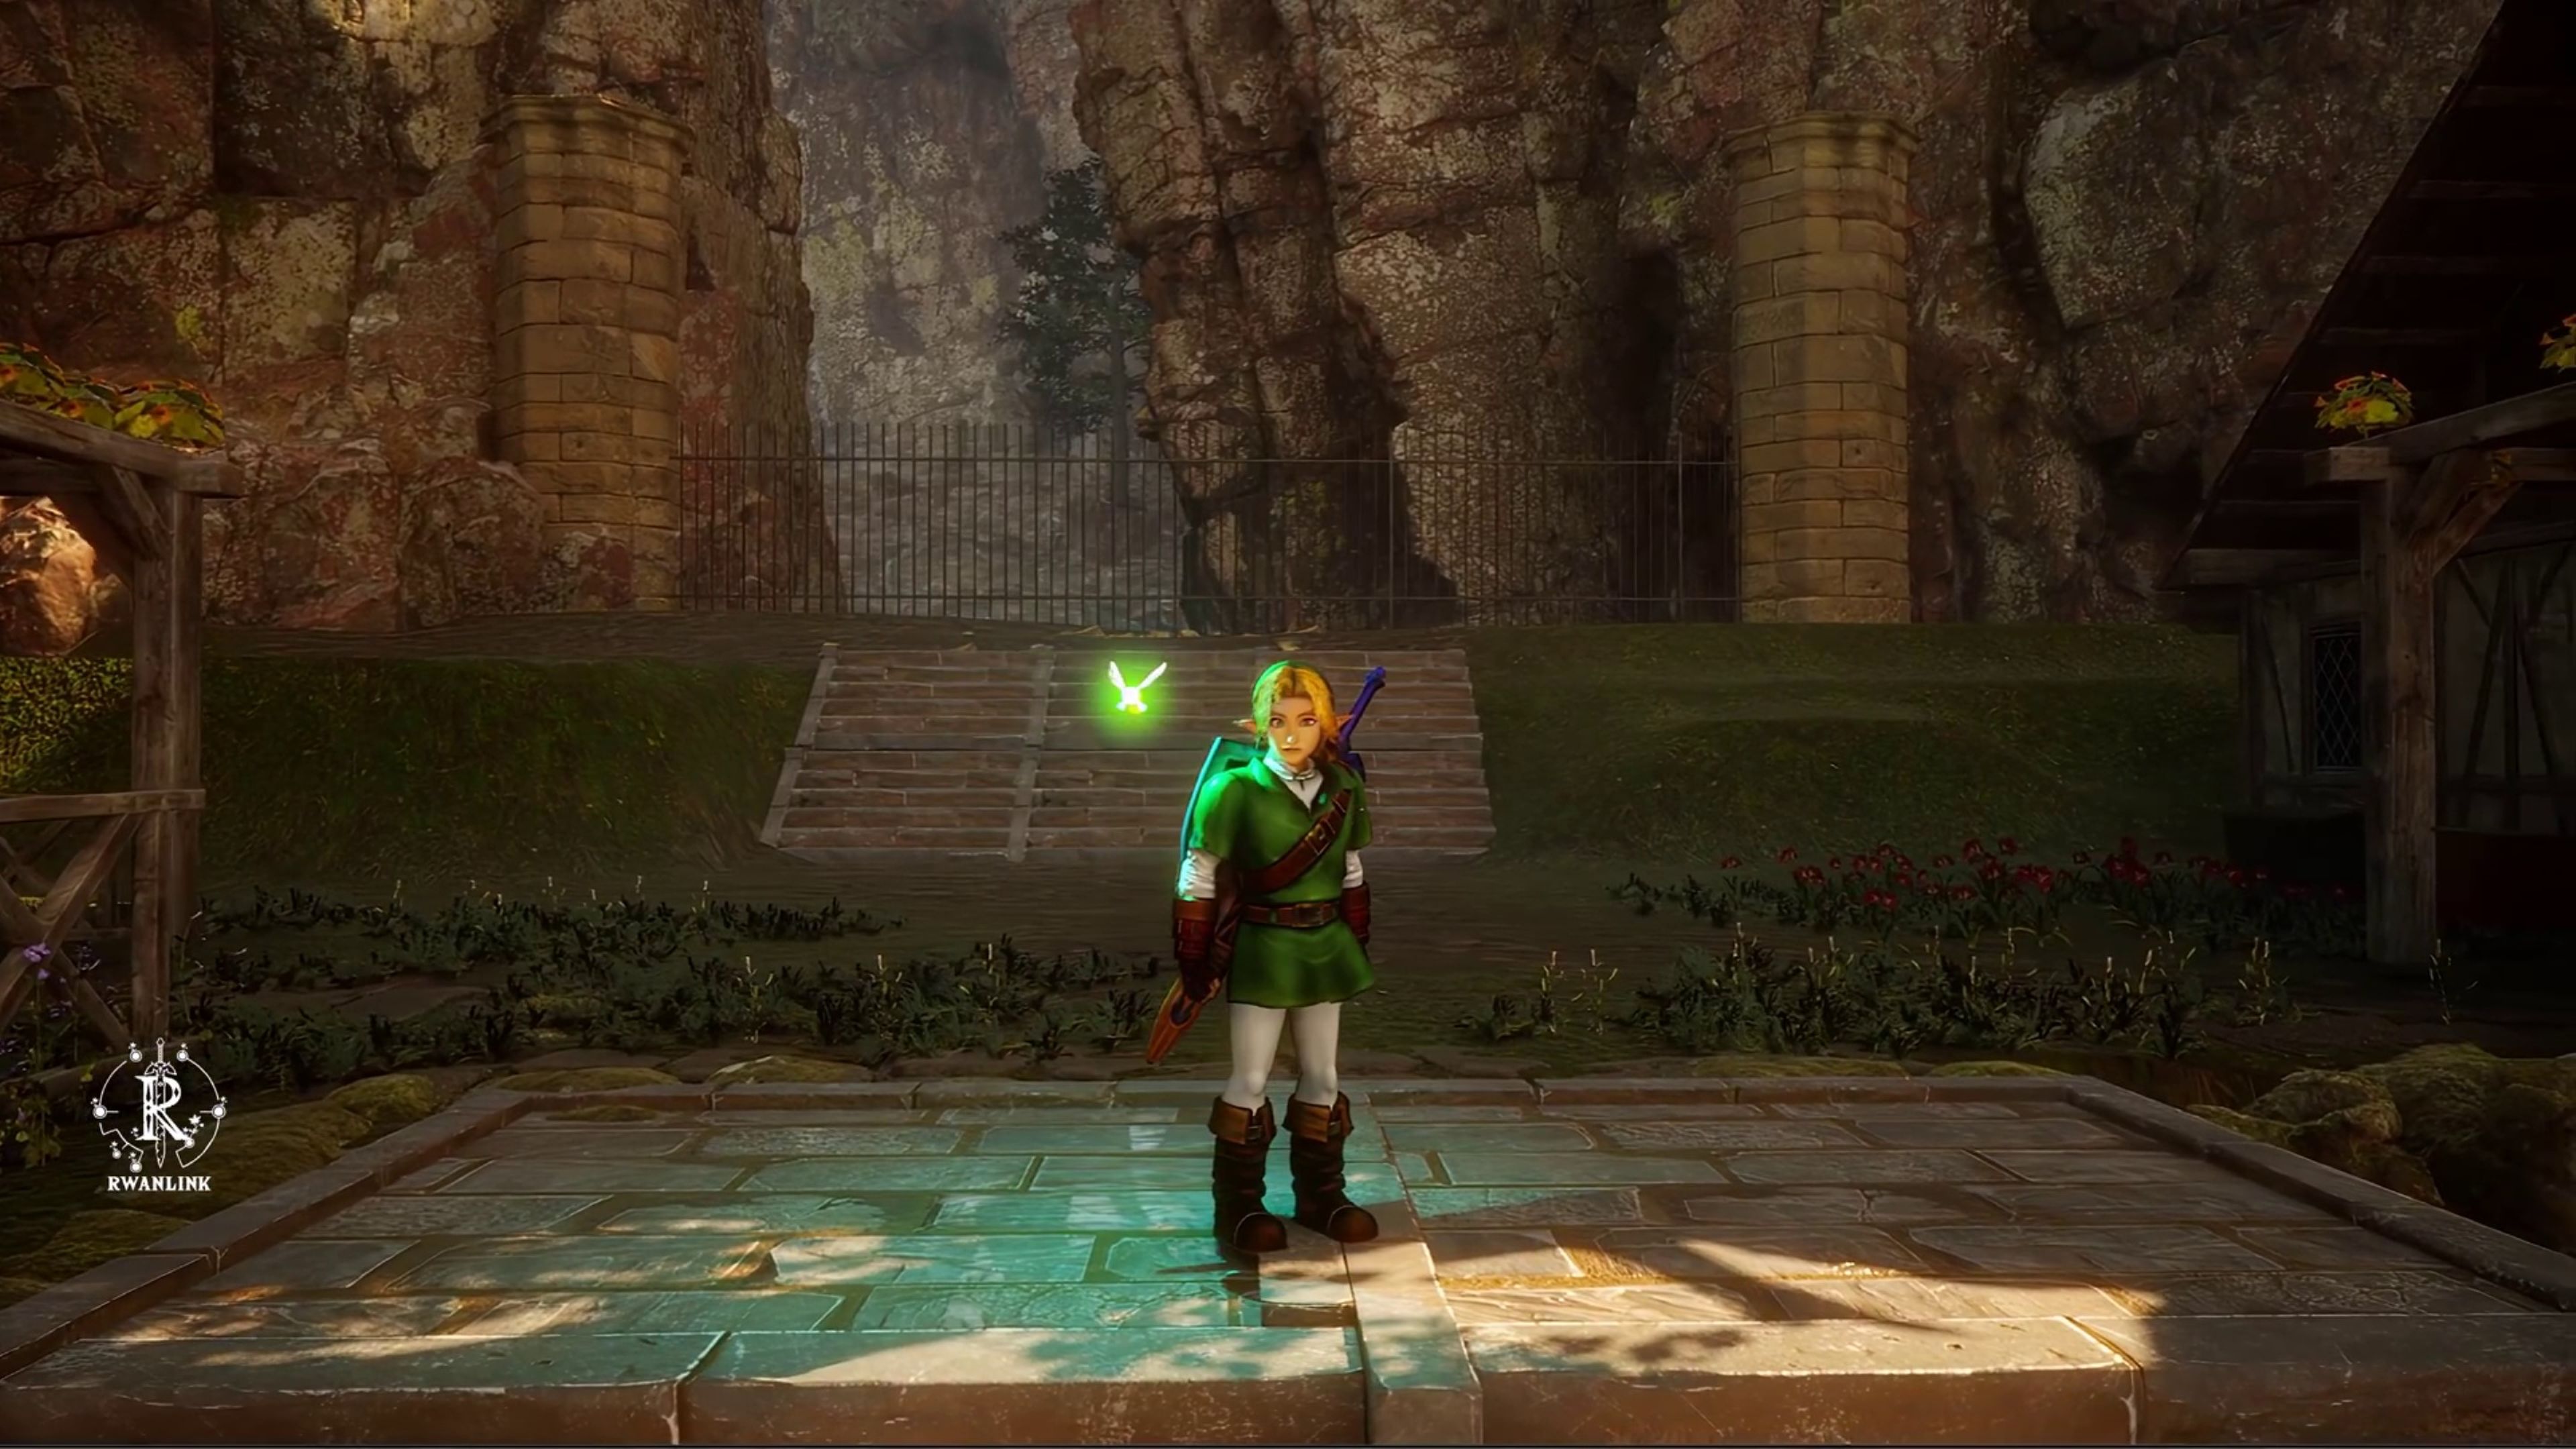 Legend of Zelda Fan is Remaking Ocarina of Time in Unreal Engine 4